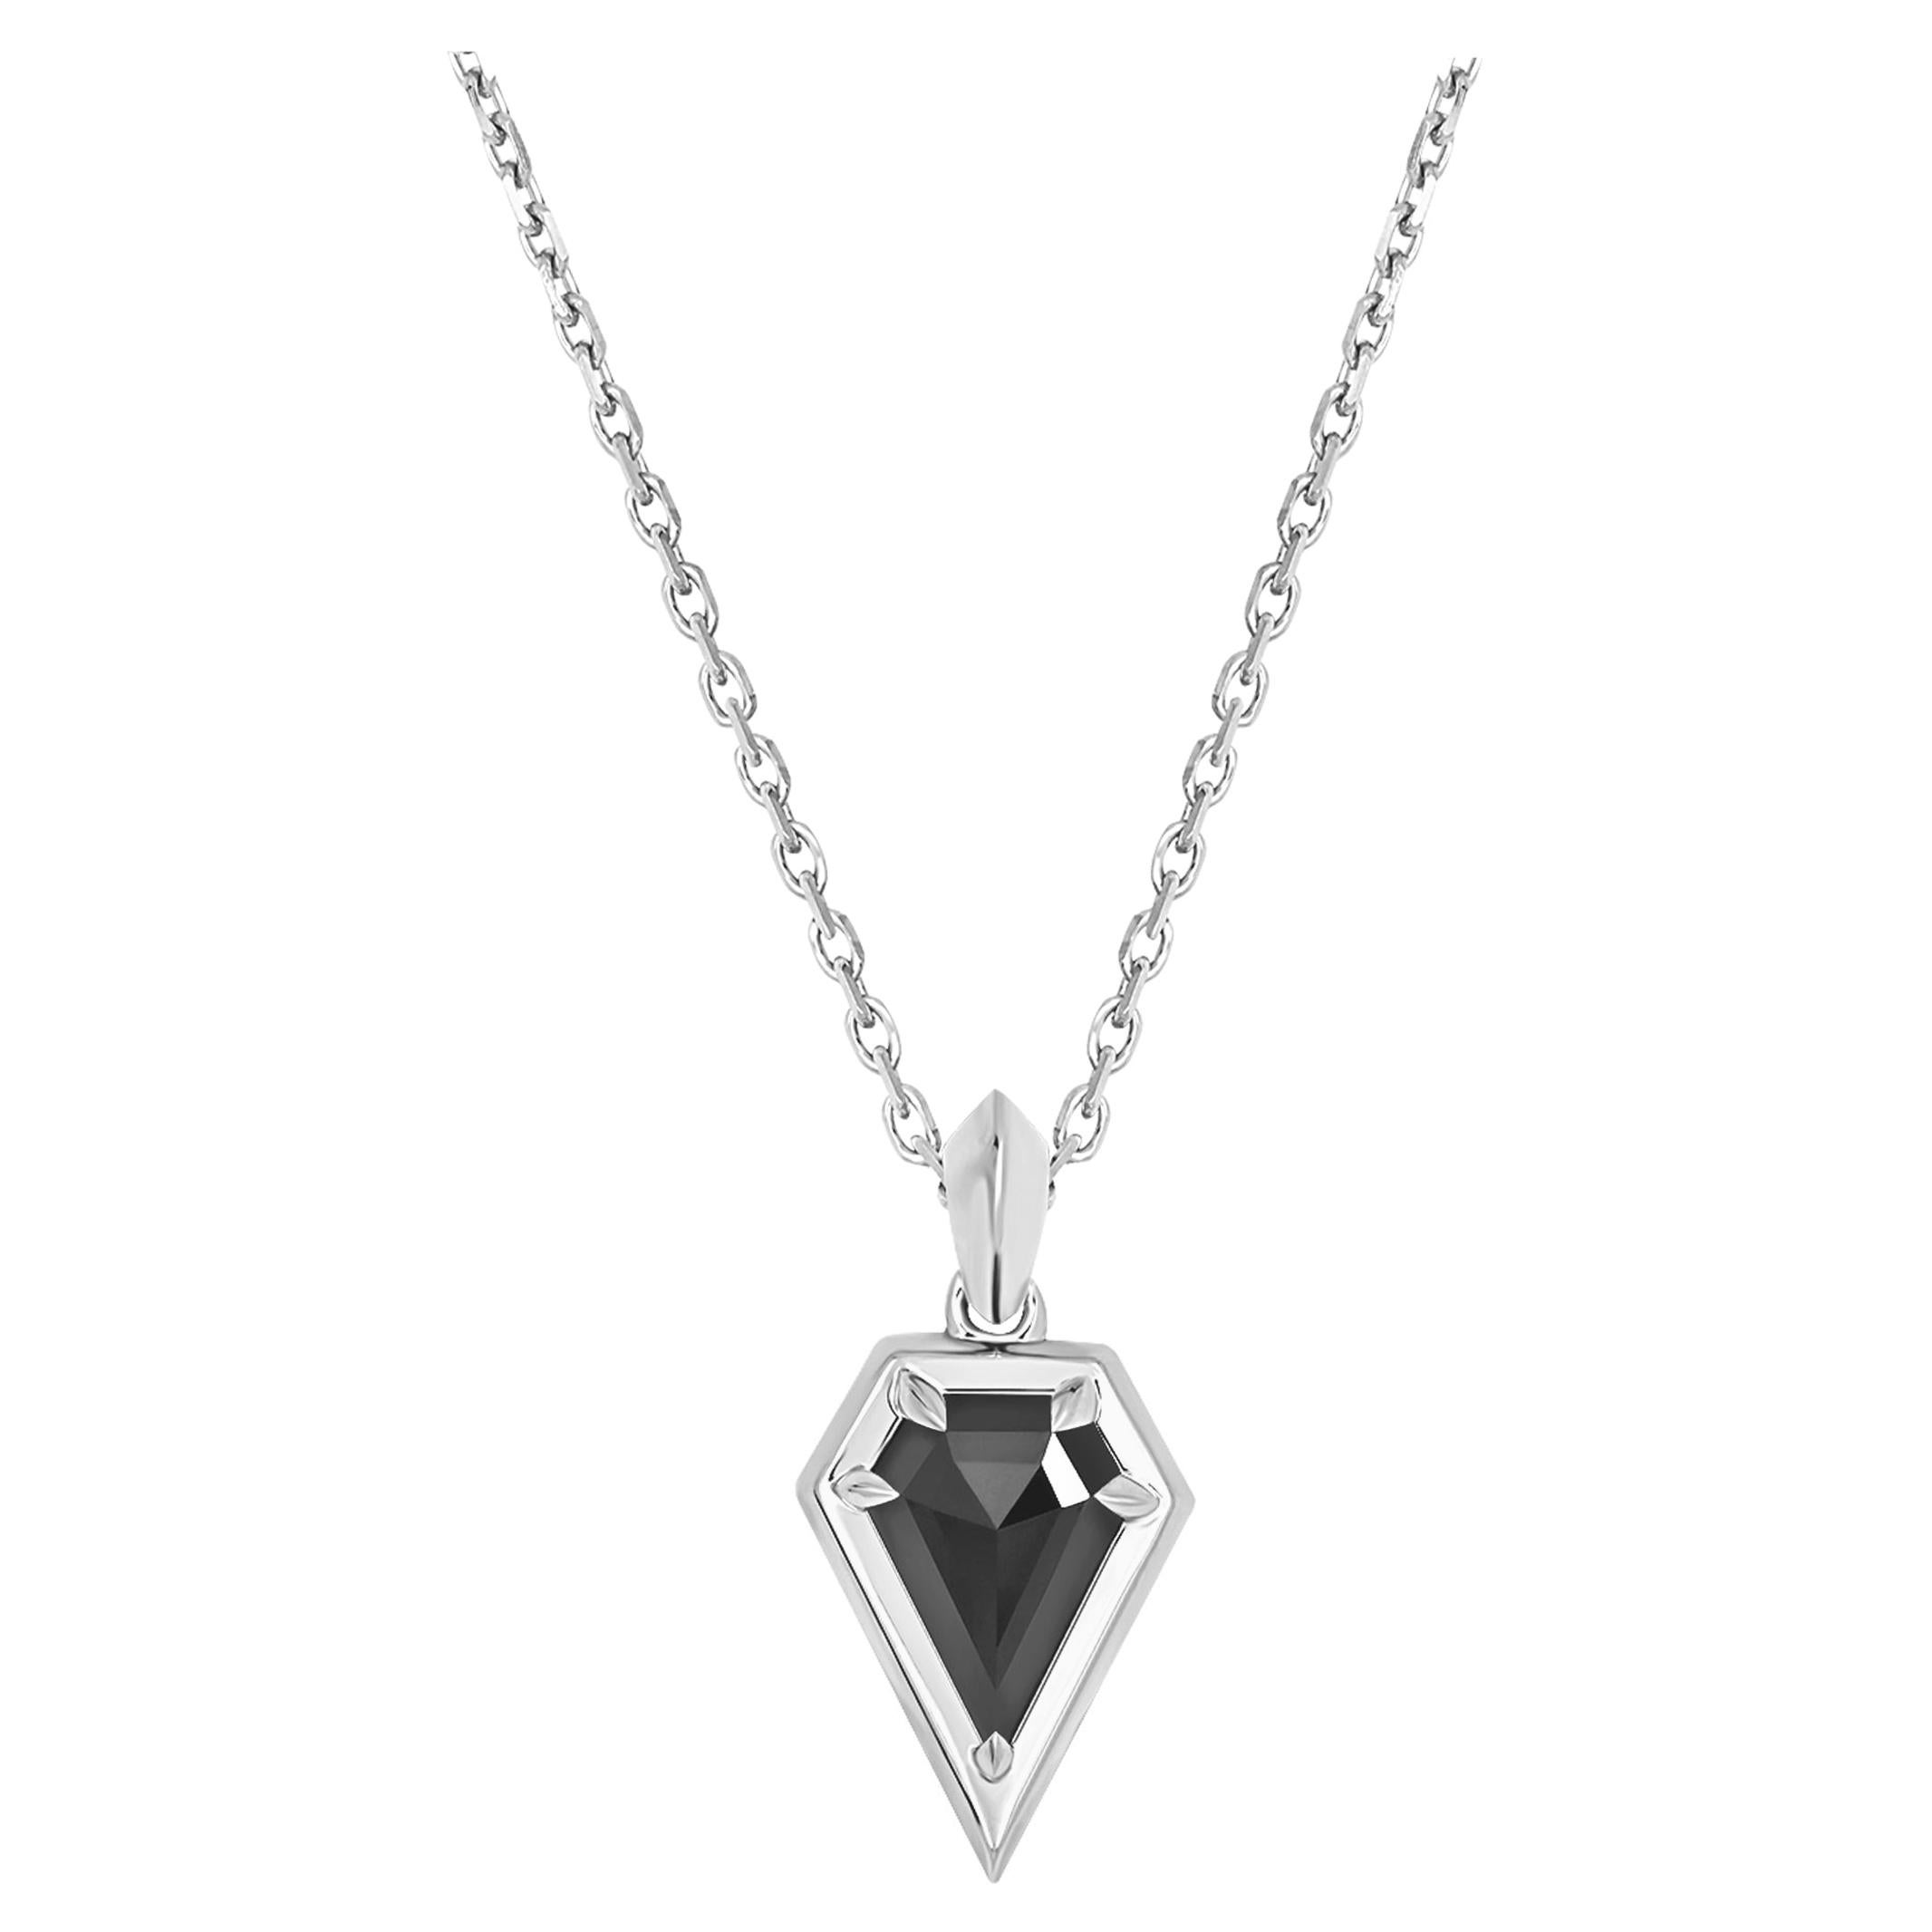 Angie Marei Aphrodite 1.20 Carat Black Diamond Pendant Necklace, 18 Karat White